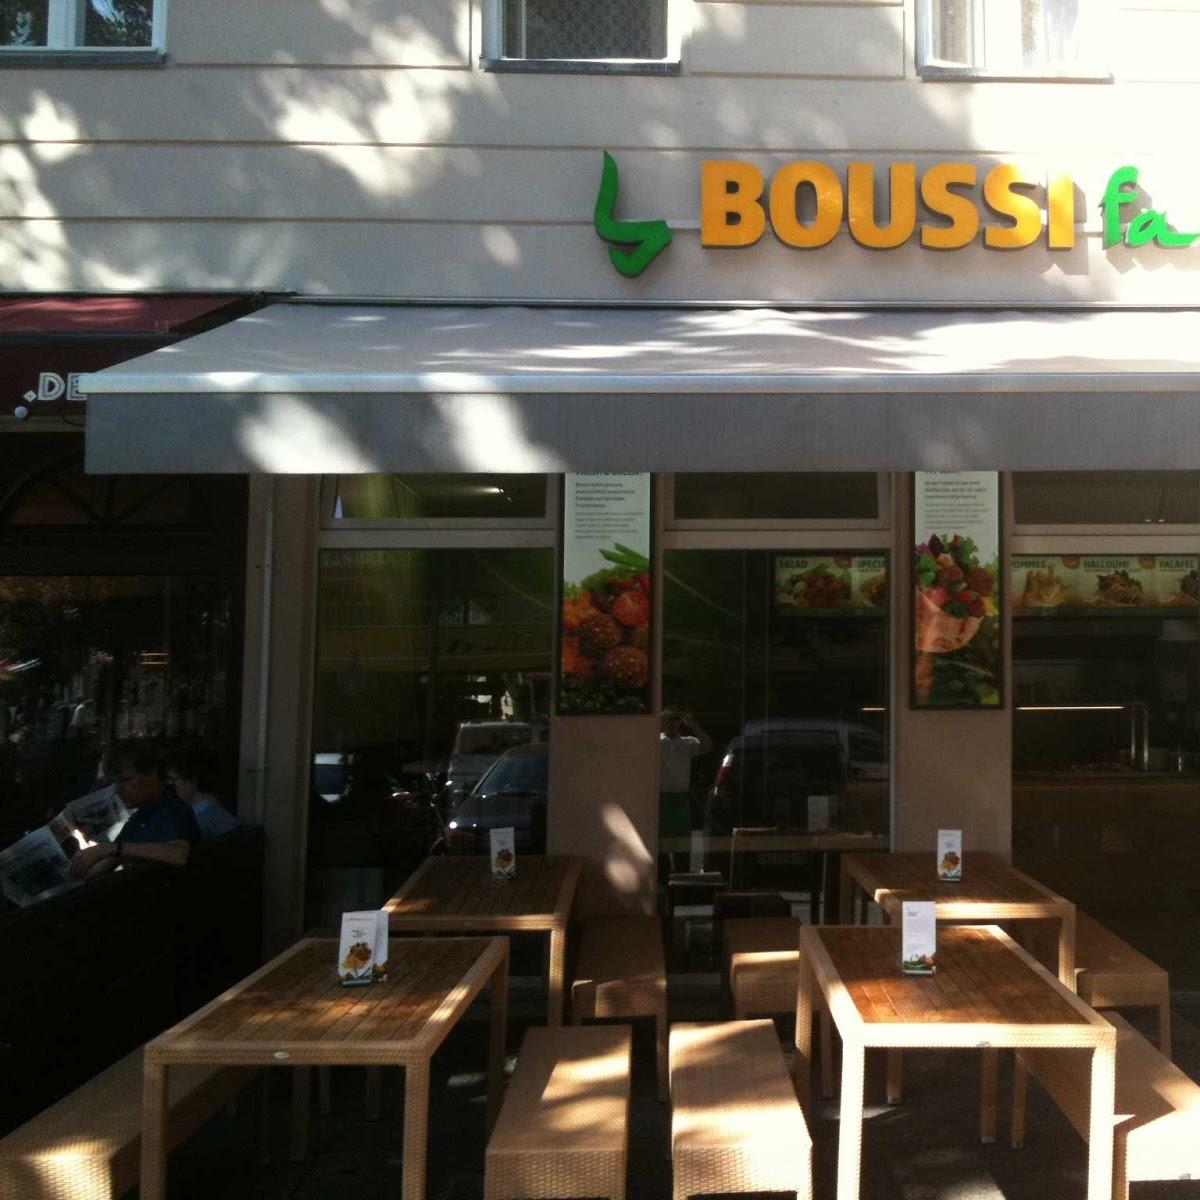 Restaurant "Boussi" in Hamburg